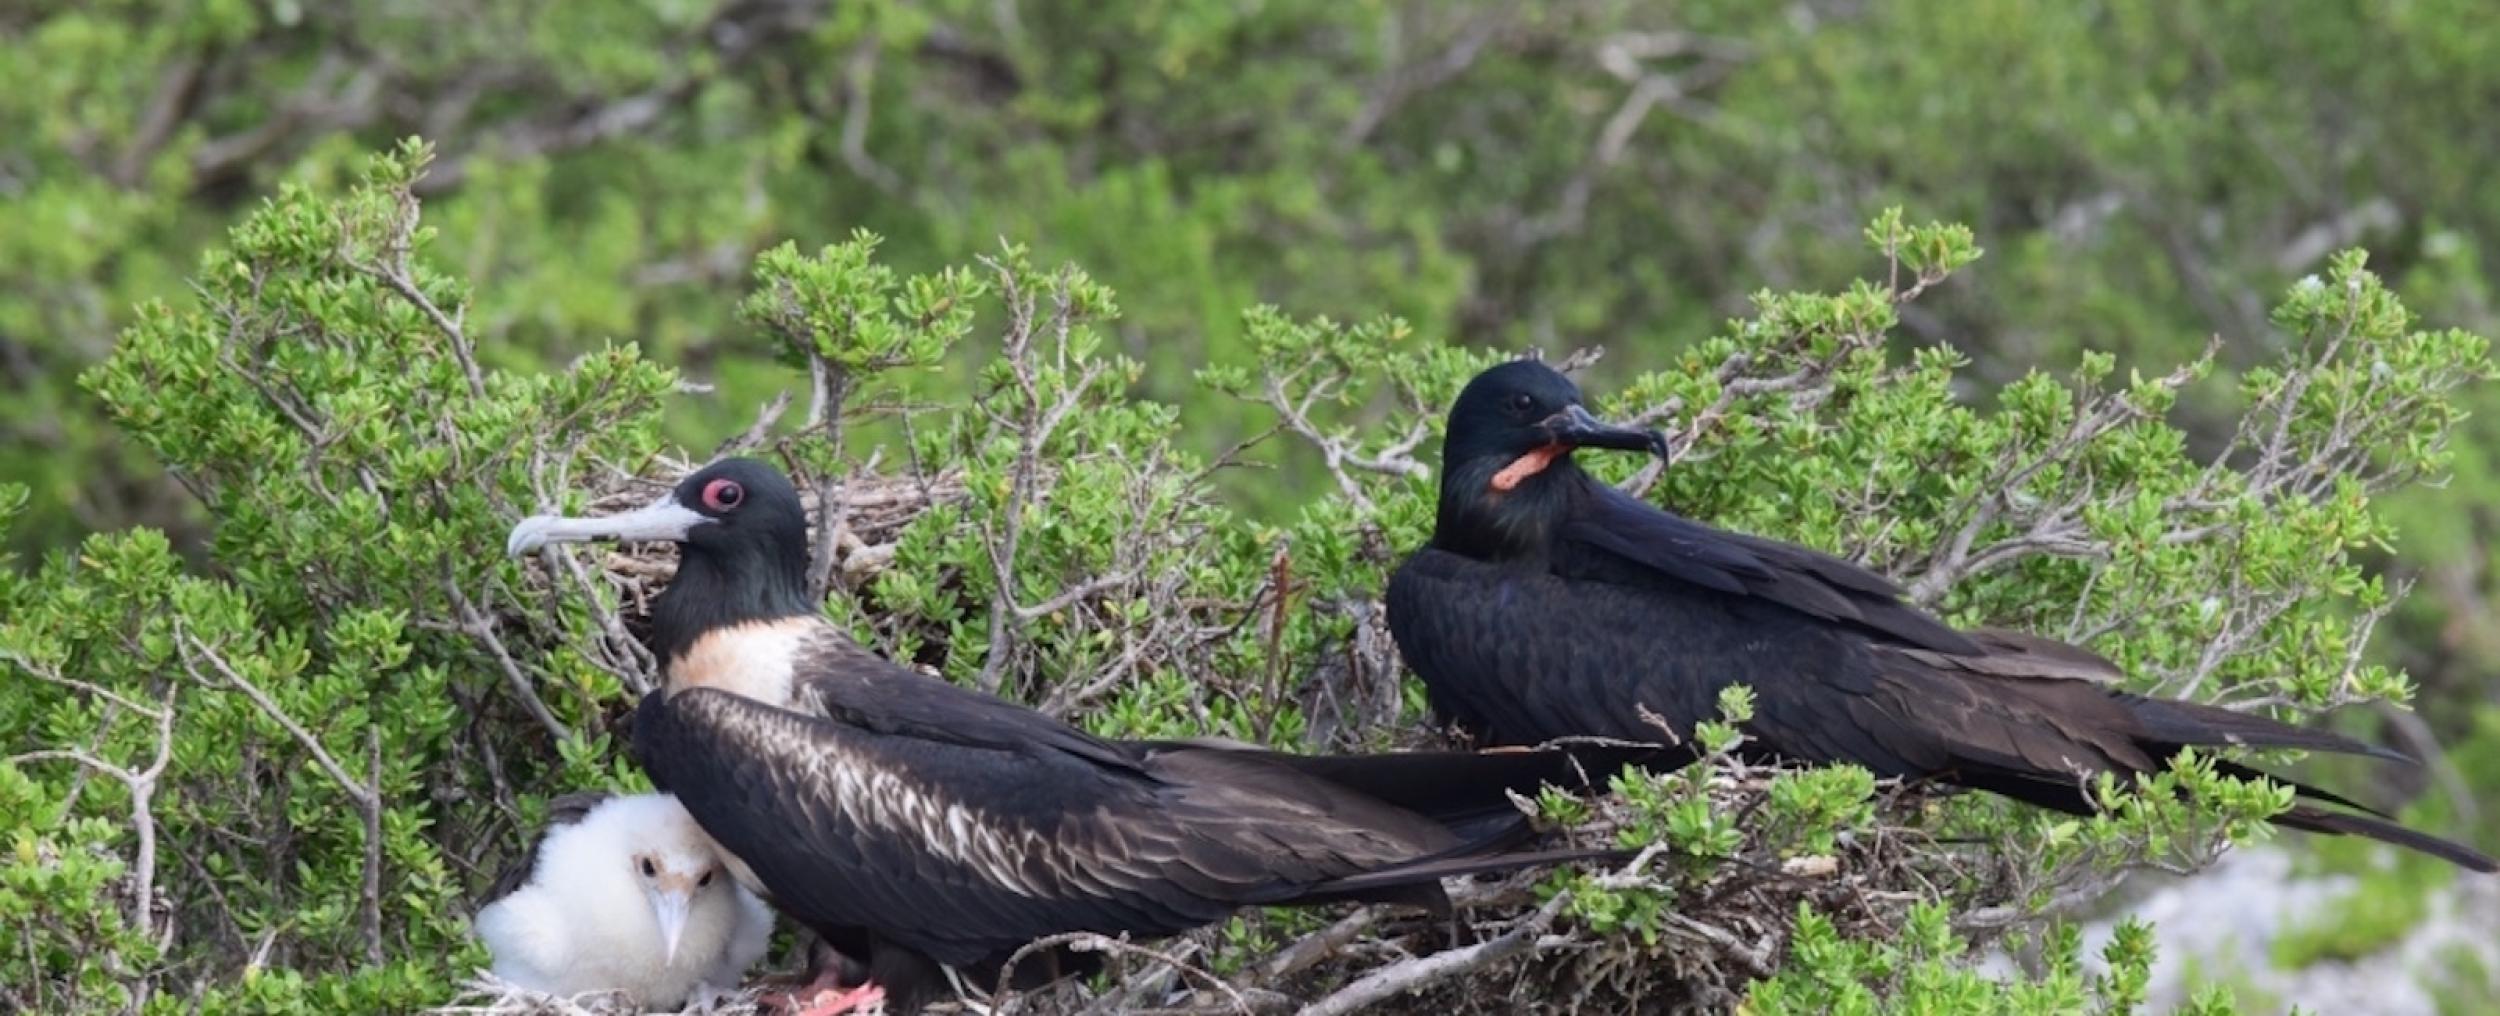 A family of frigatebirds